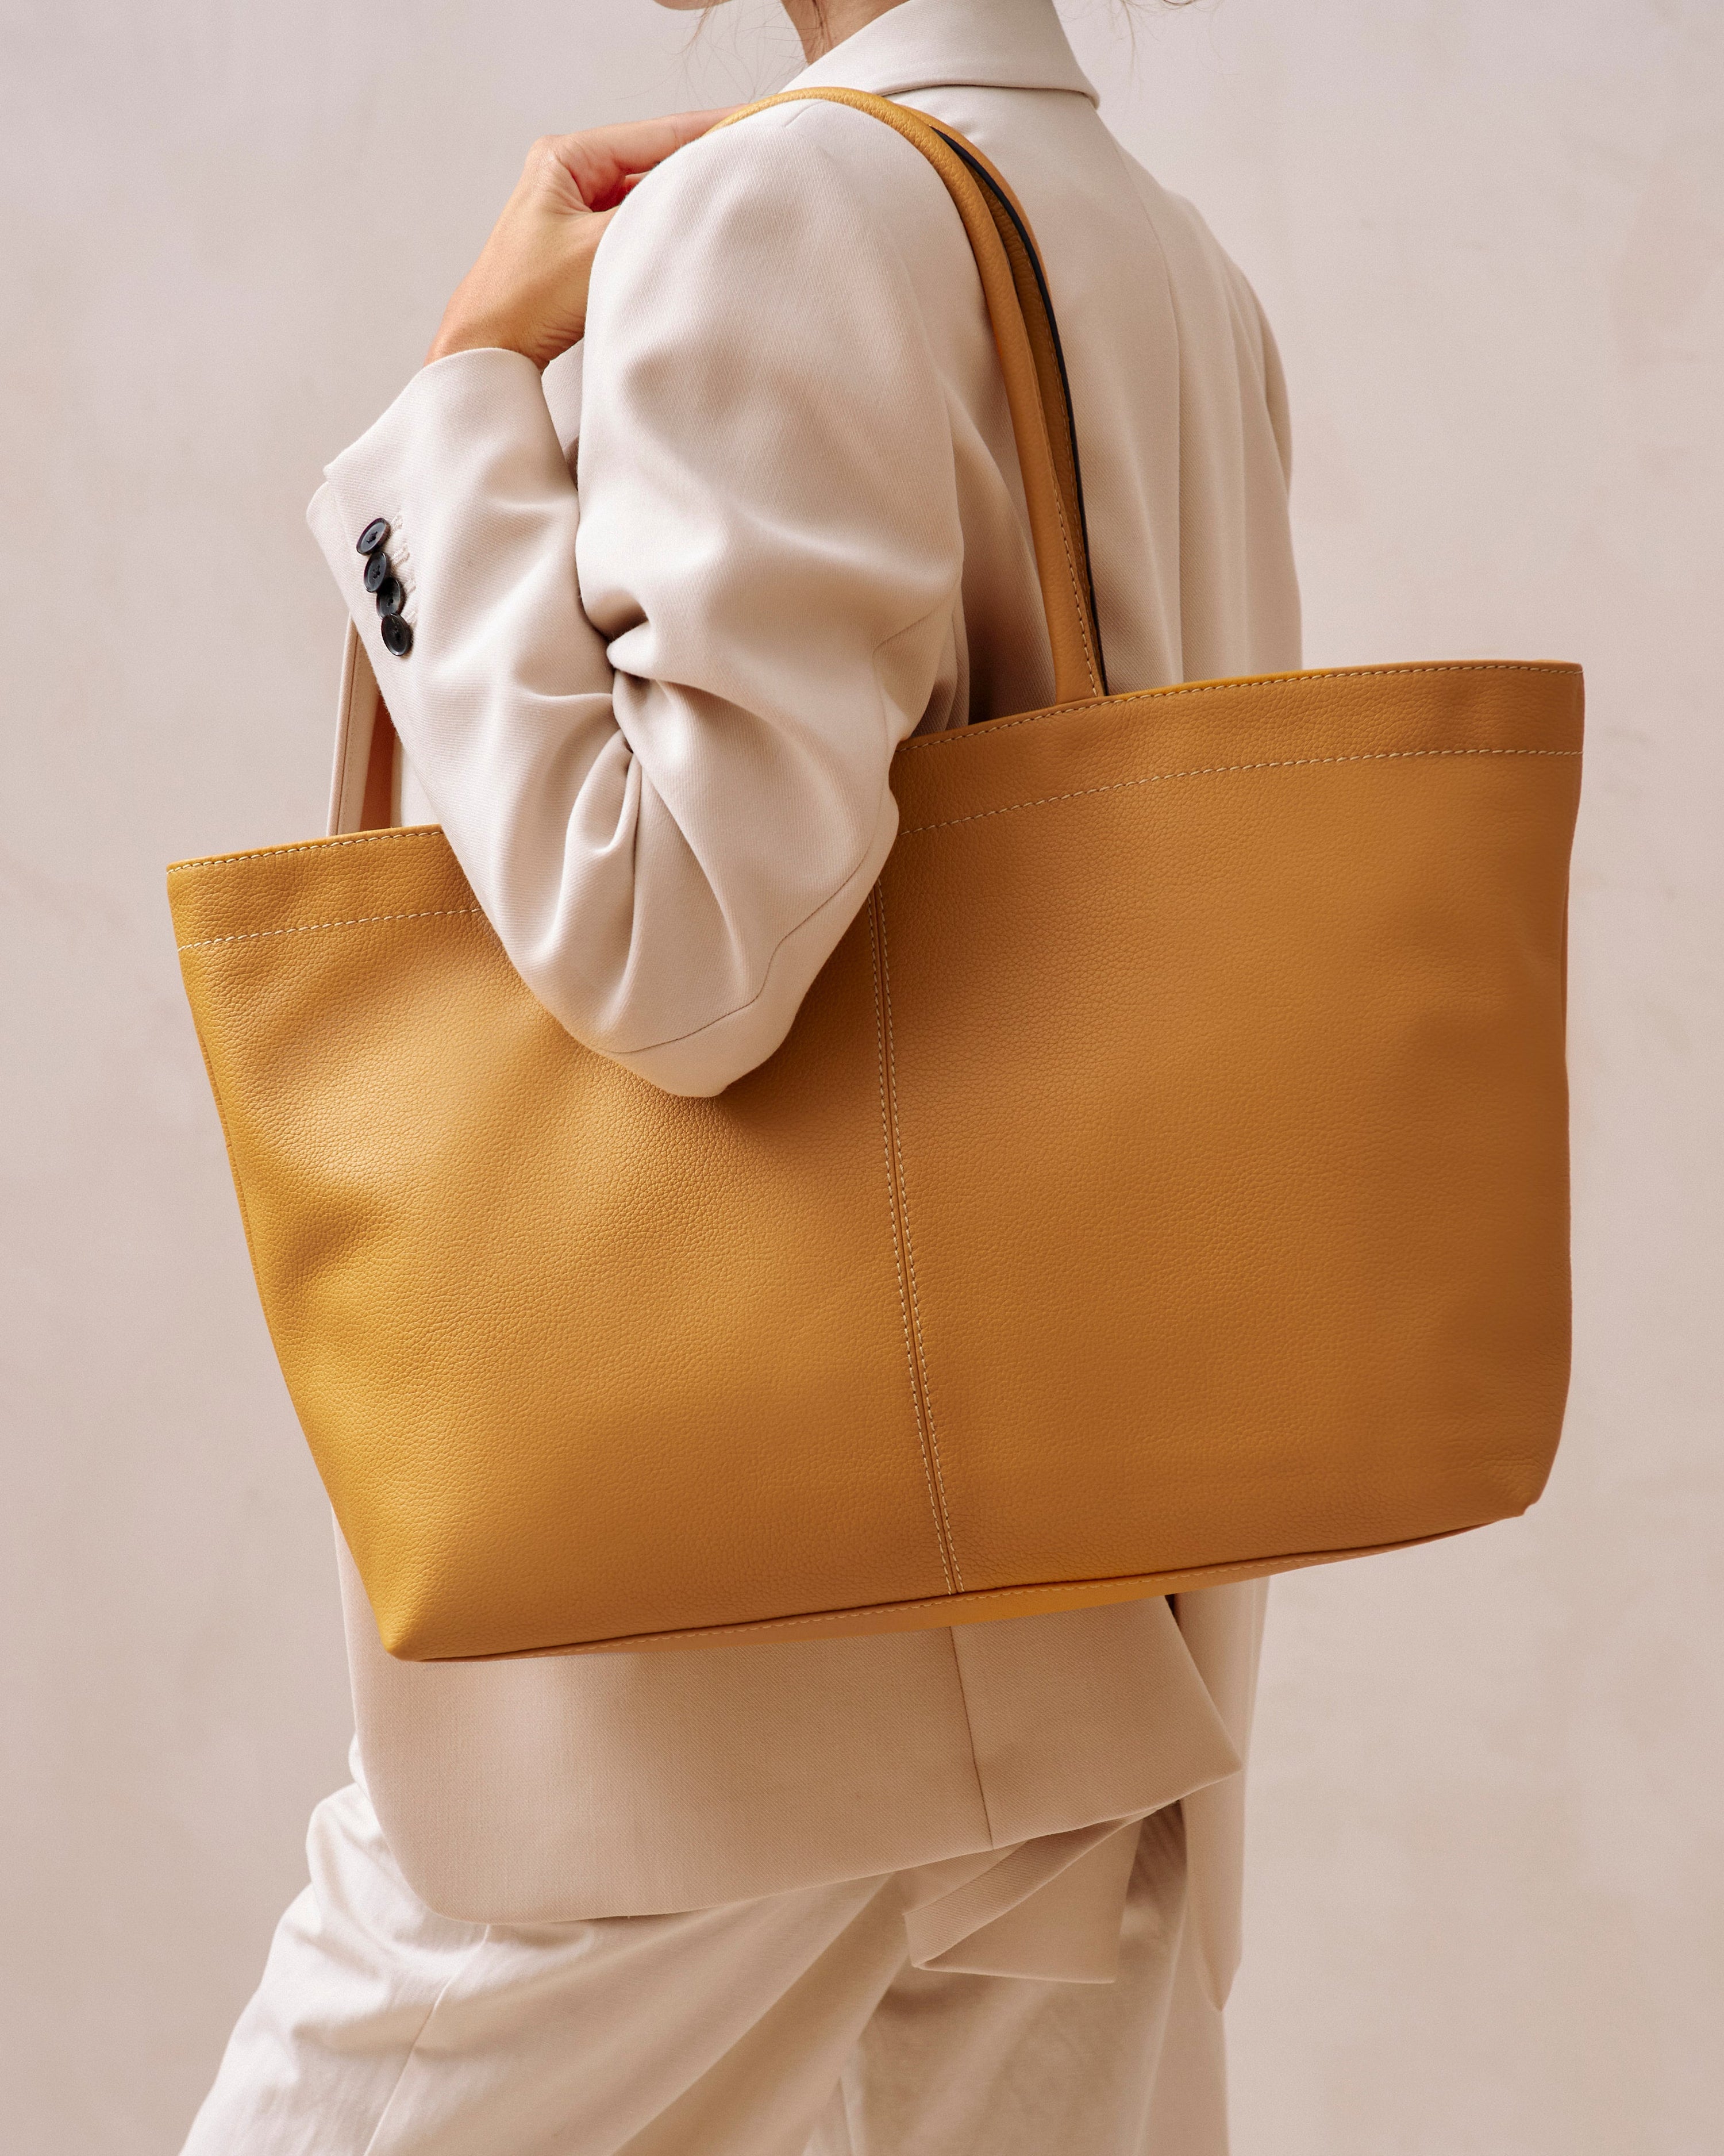 the-f-marigold-yellow-handbags-alohas-189543_3000x_c2c31707-fcc8-430f-805e-9b289034d50d.jpg